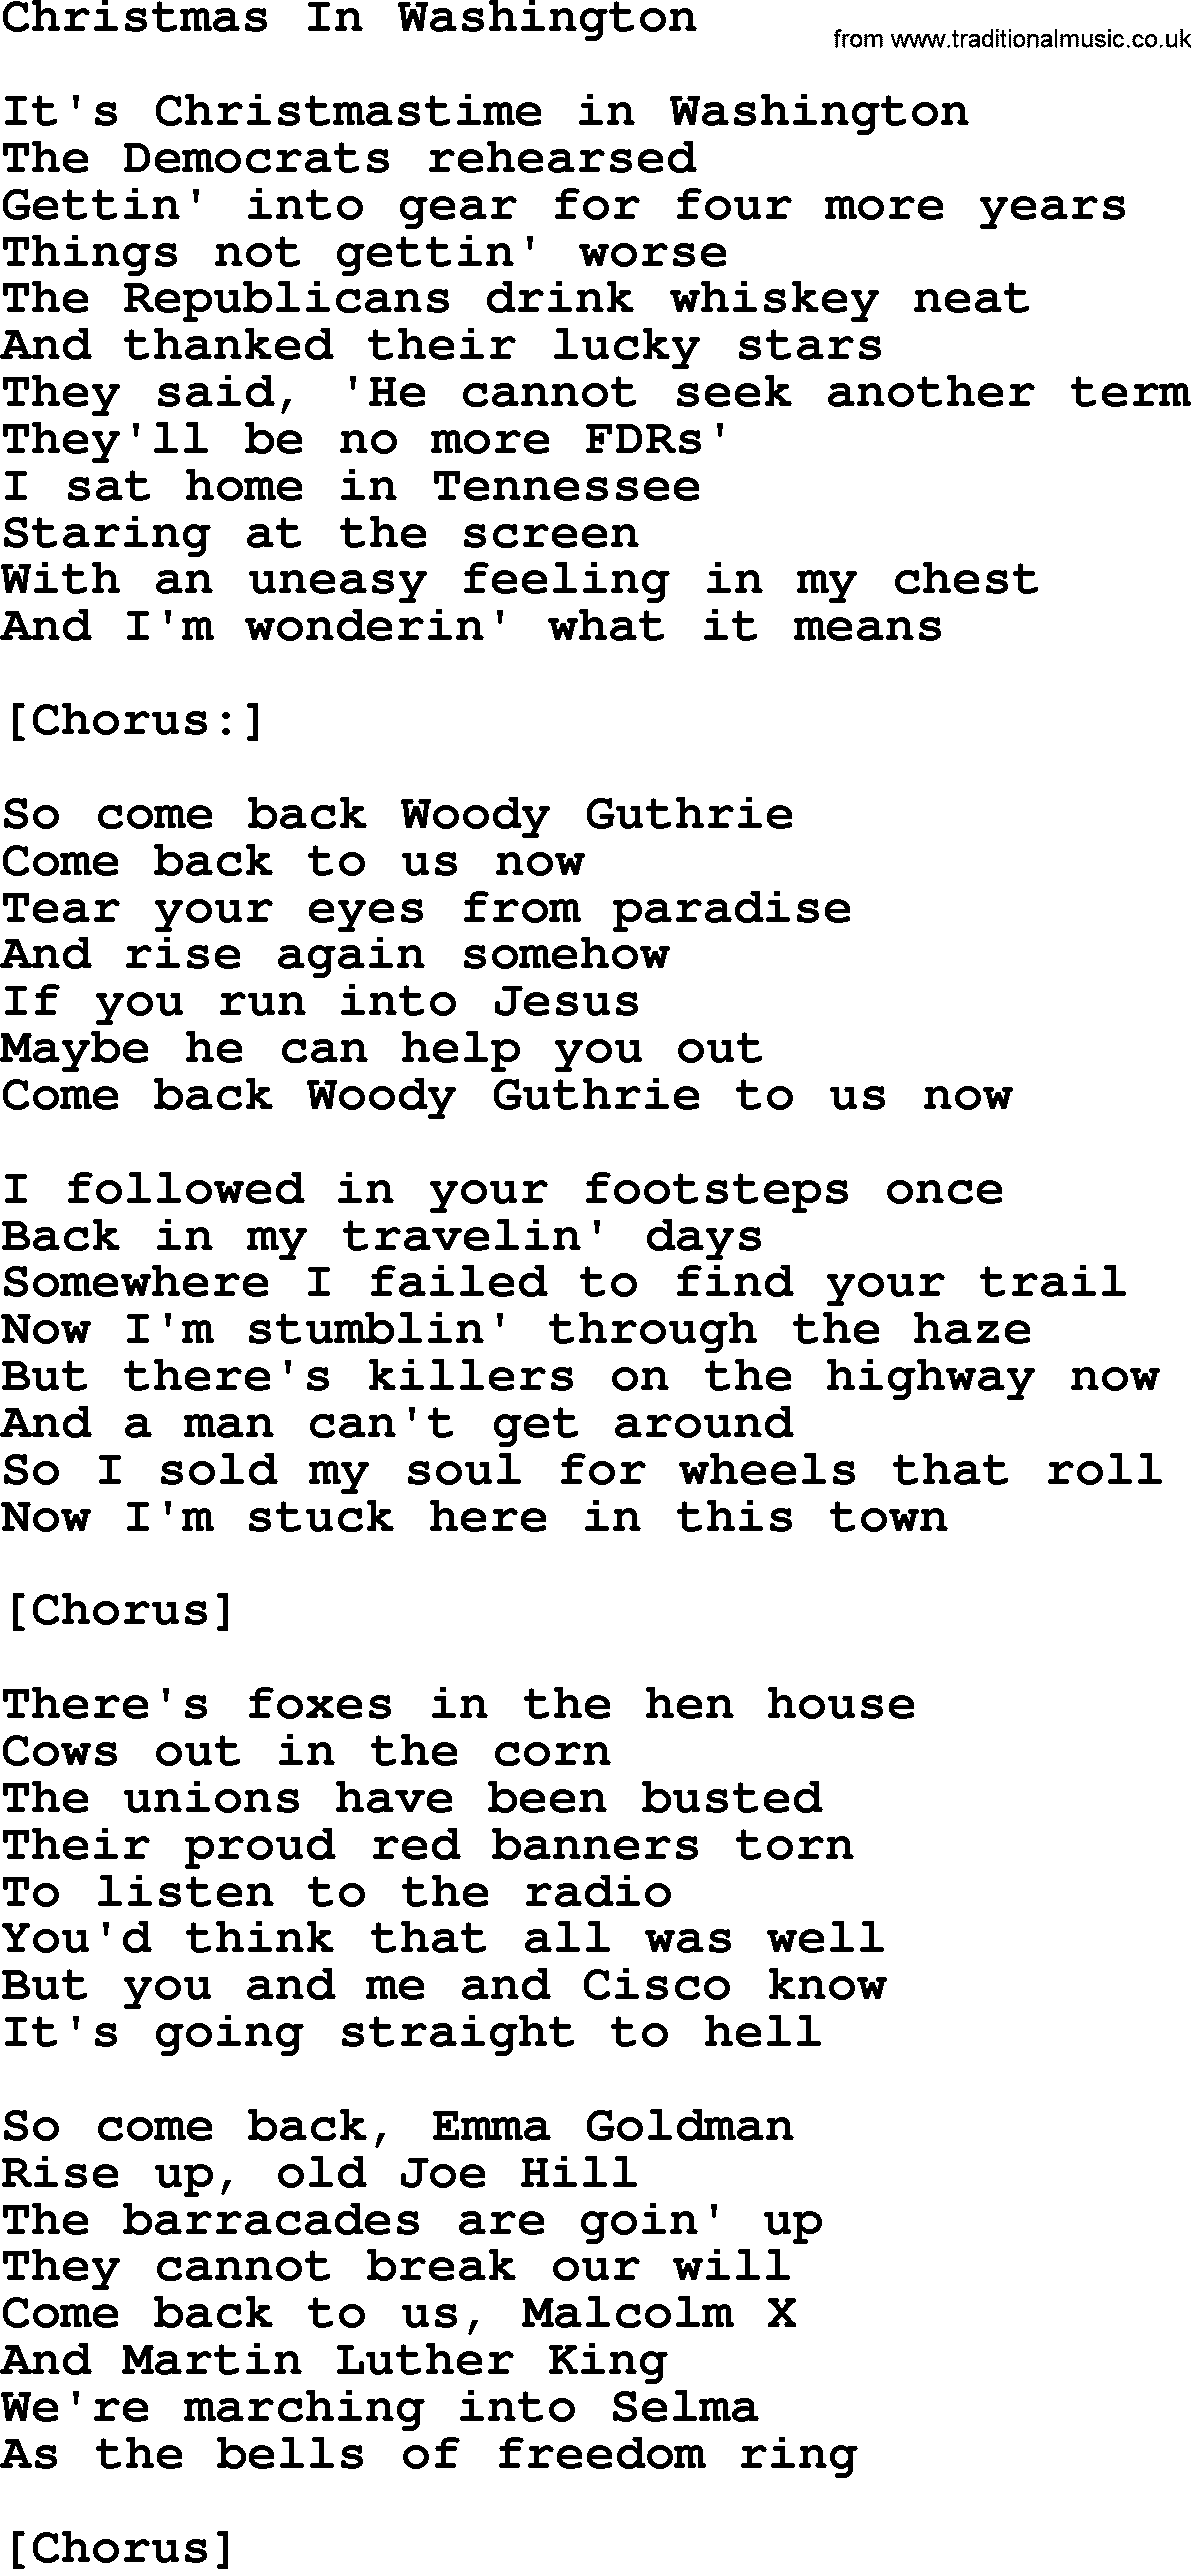 Joan Baez song Christmas In Washington, lyrics